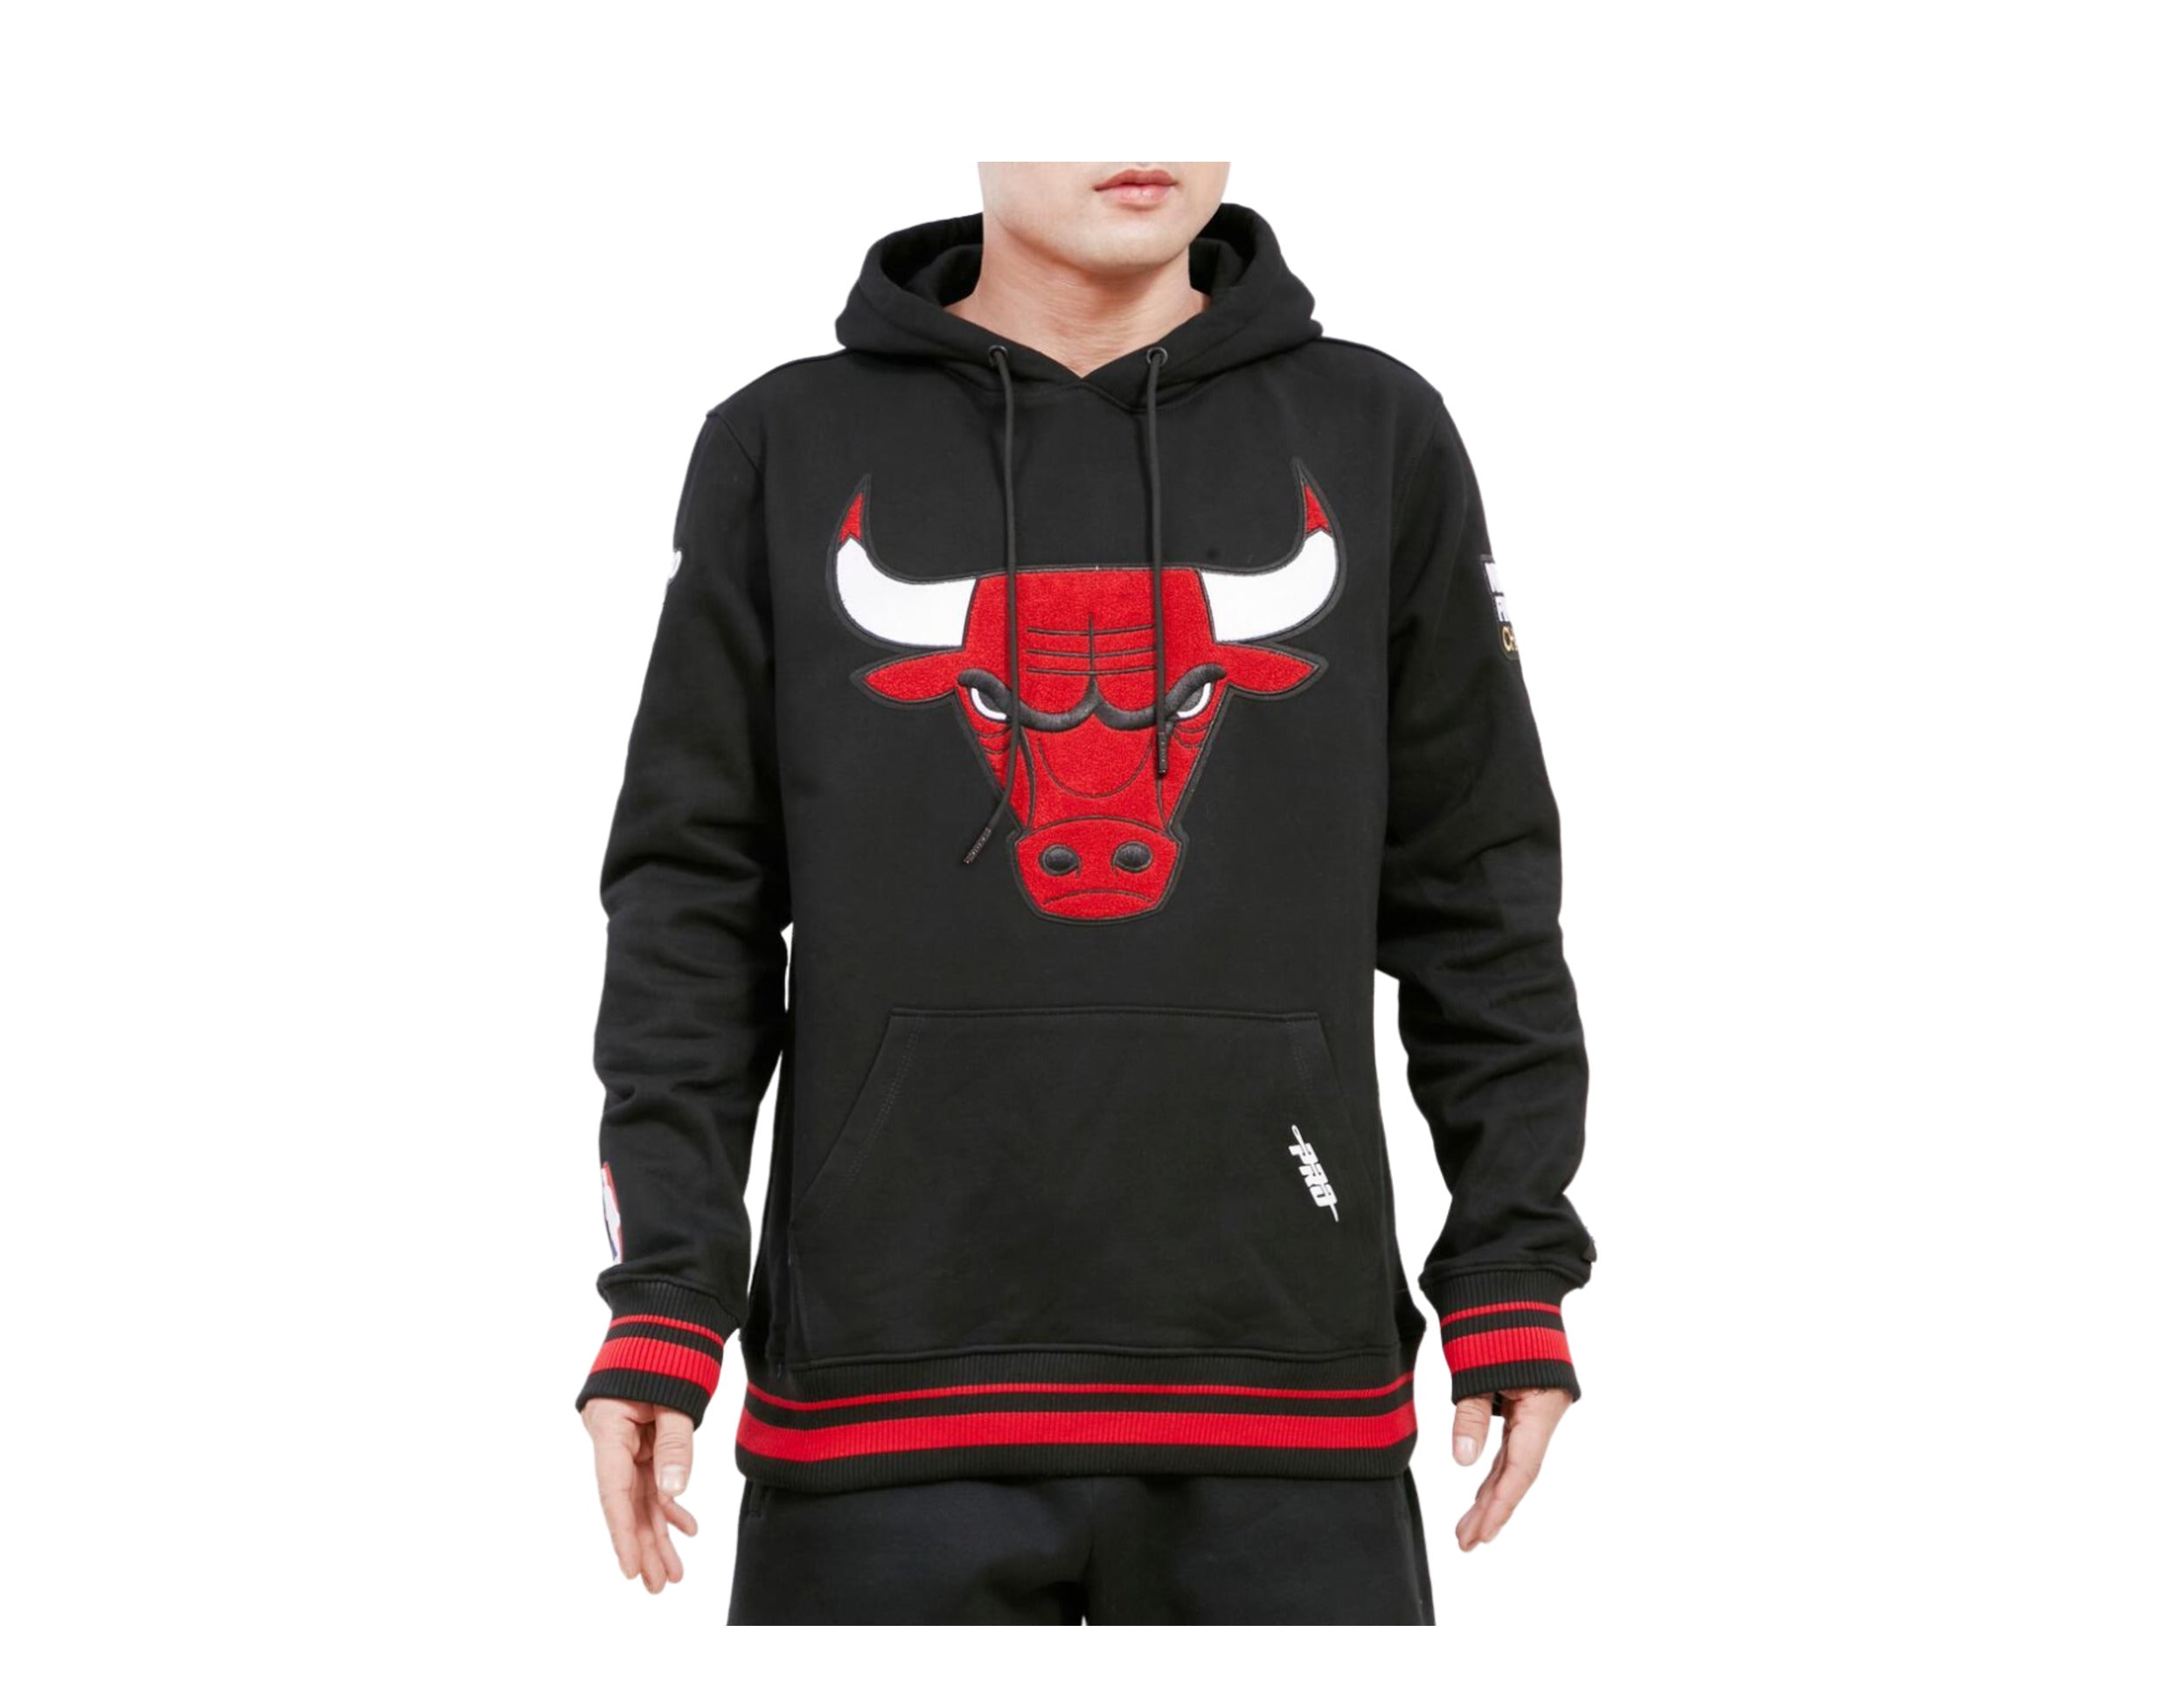 Chicago Bulls Mens Hoodies, Bulls Hooded Sweatshirt